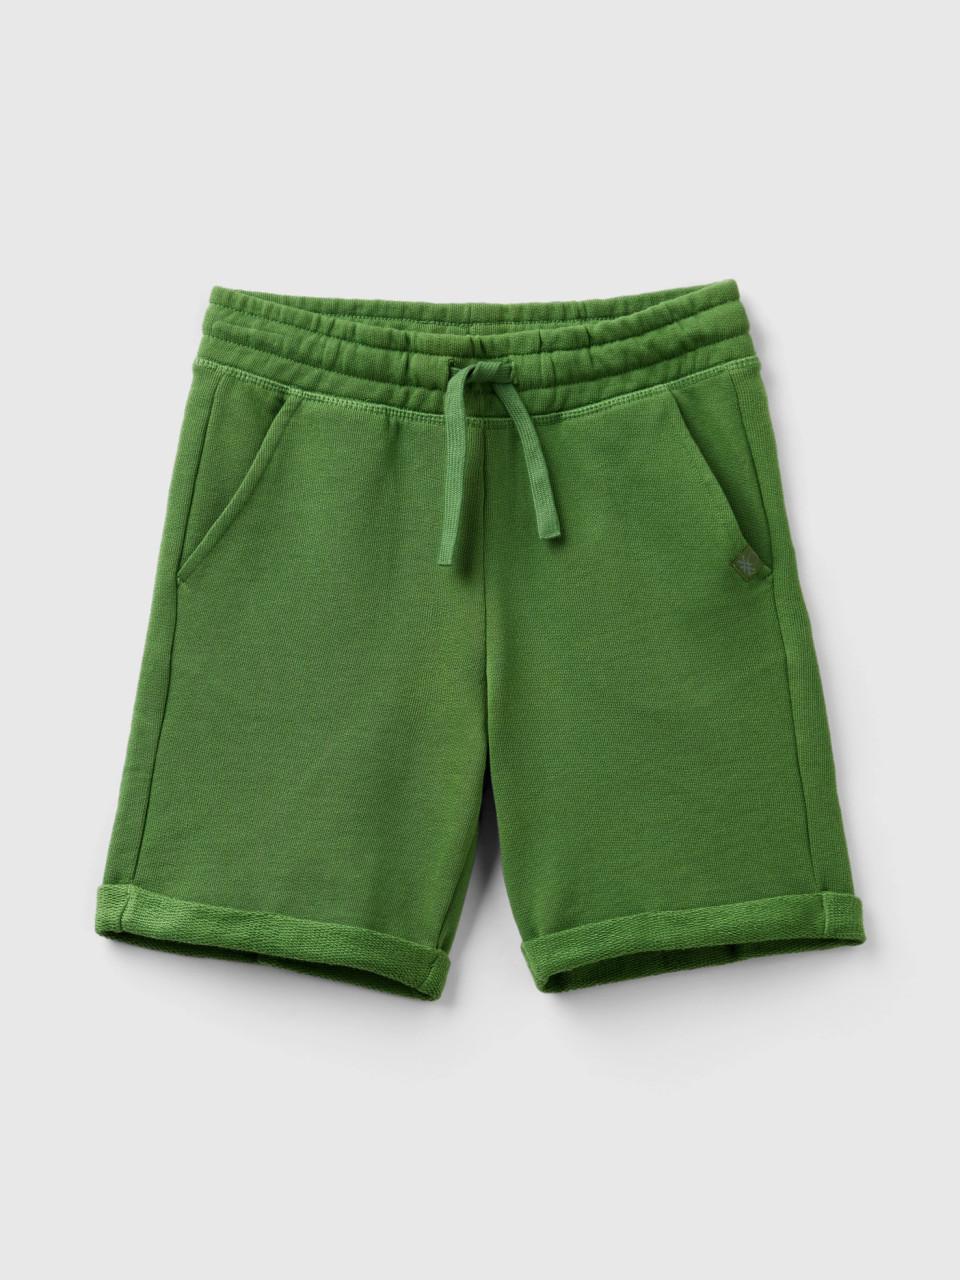 Benetton, Bermudas In Pure Cotton Sweat, Military Green, Kids